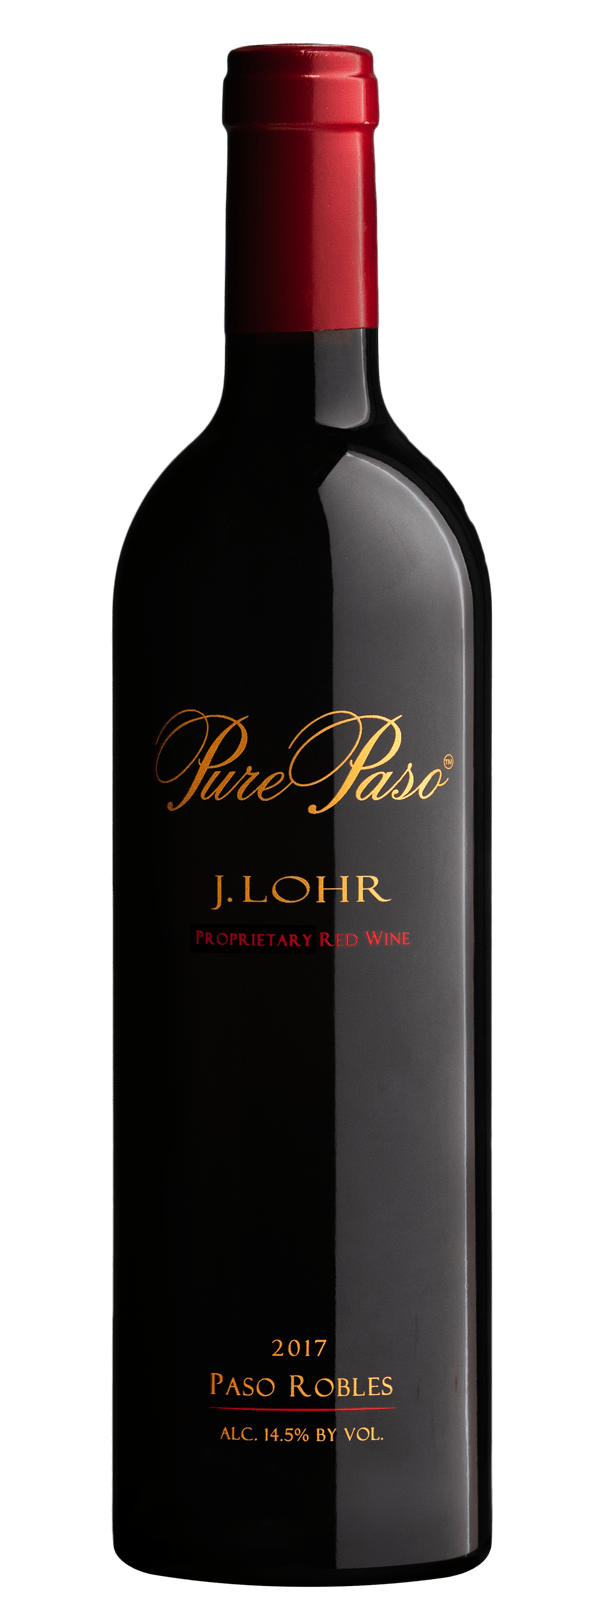 J LOHR PURE PASO RED WINE